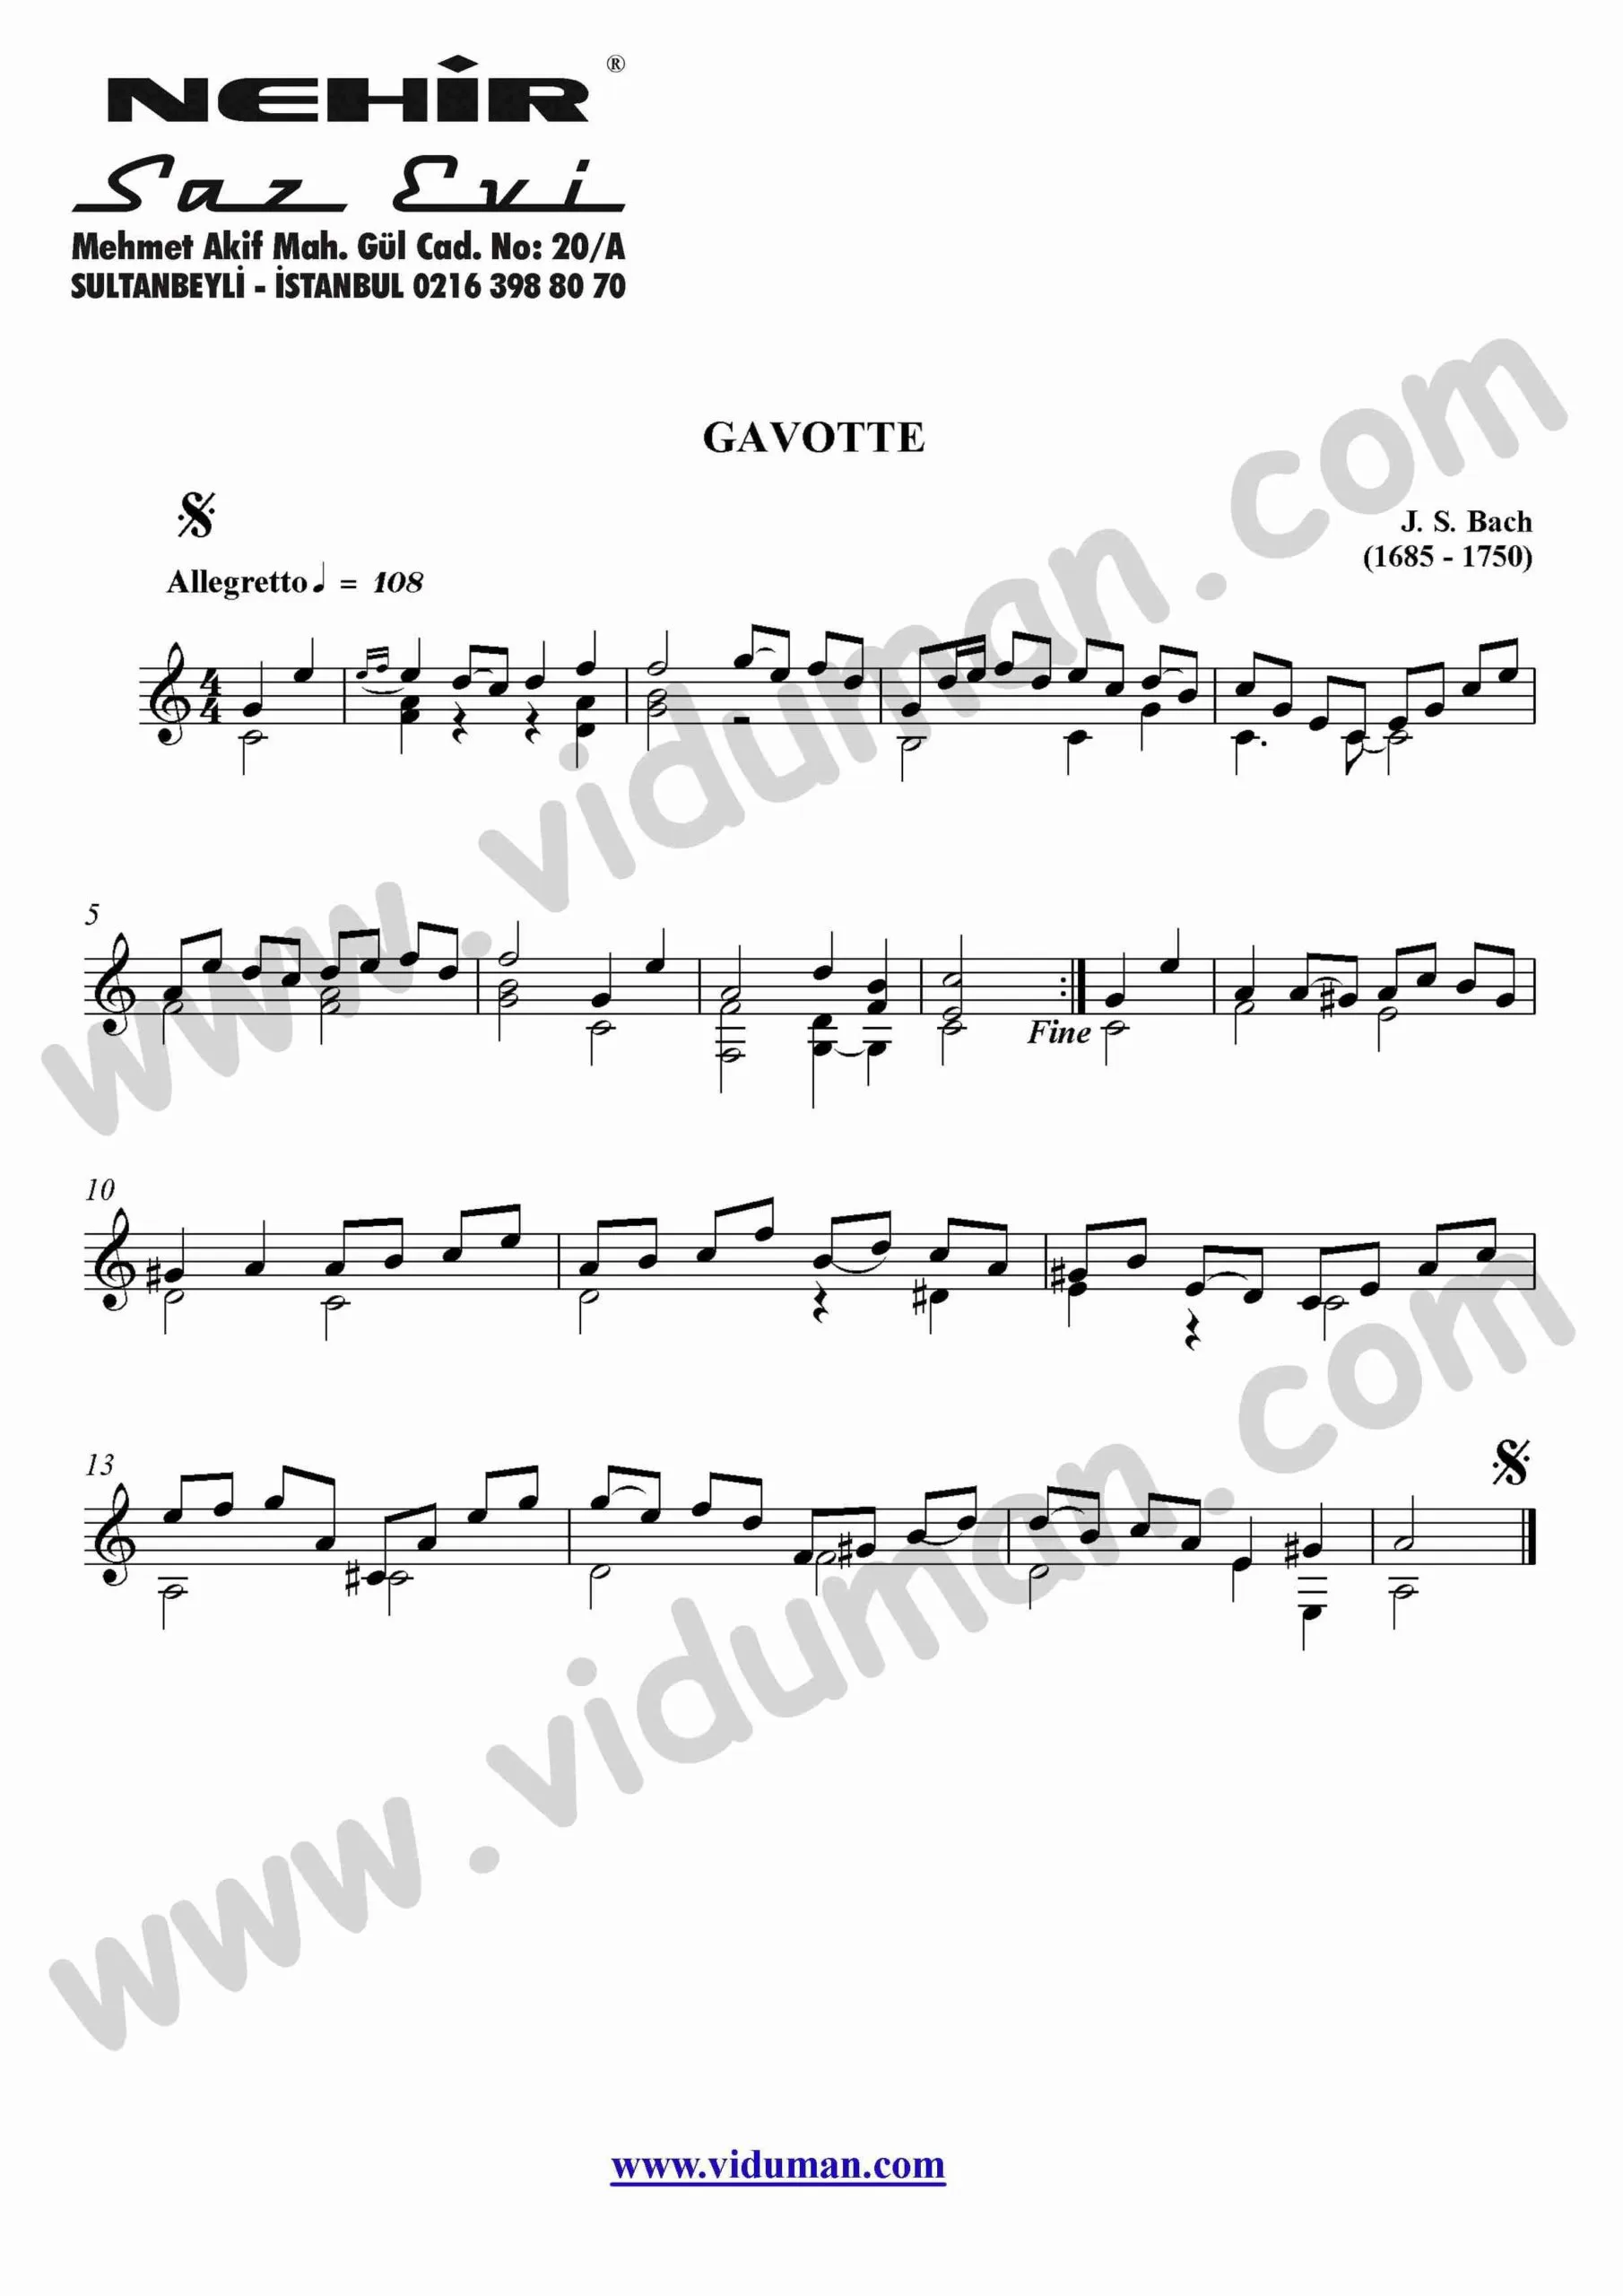 43- Gavotte (J. S. Bach)